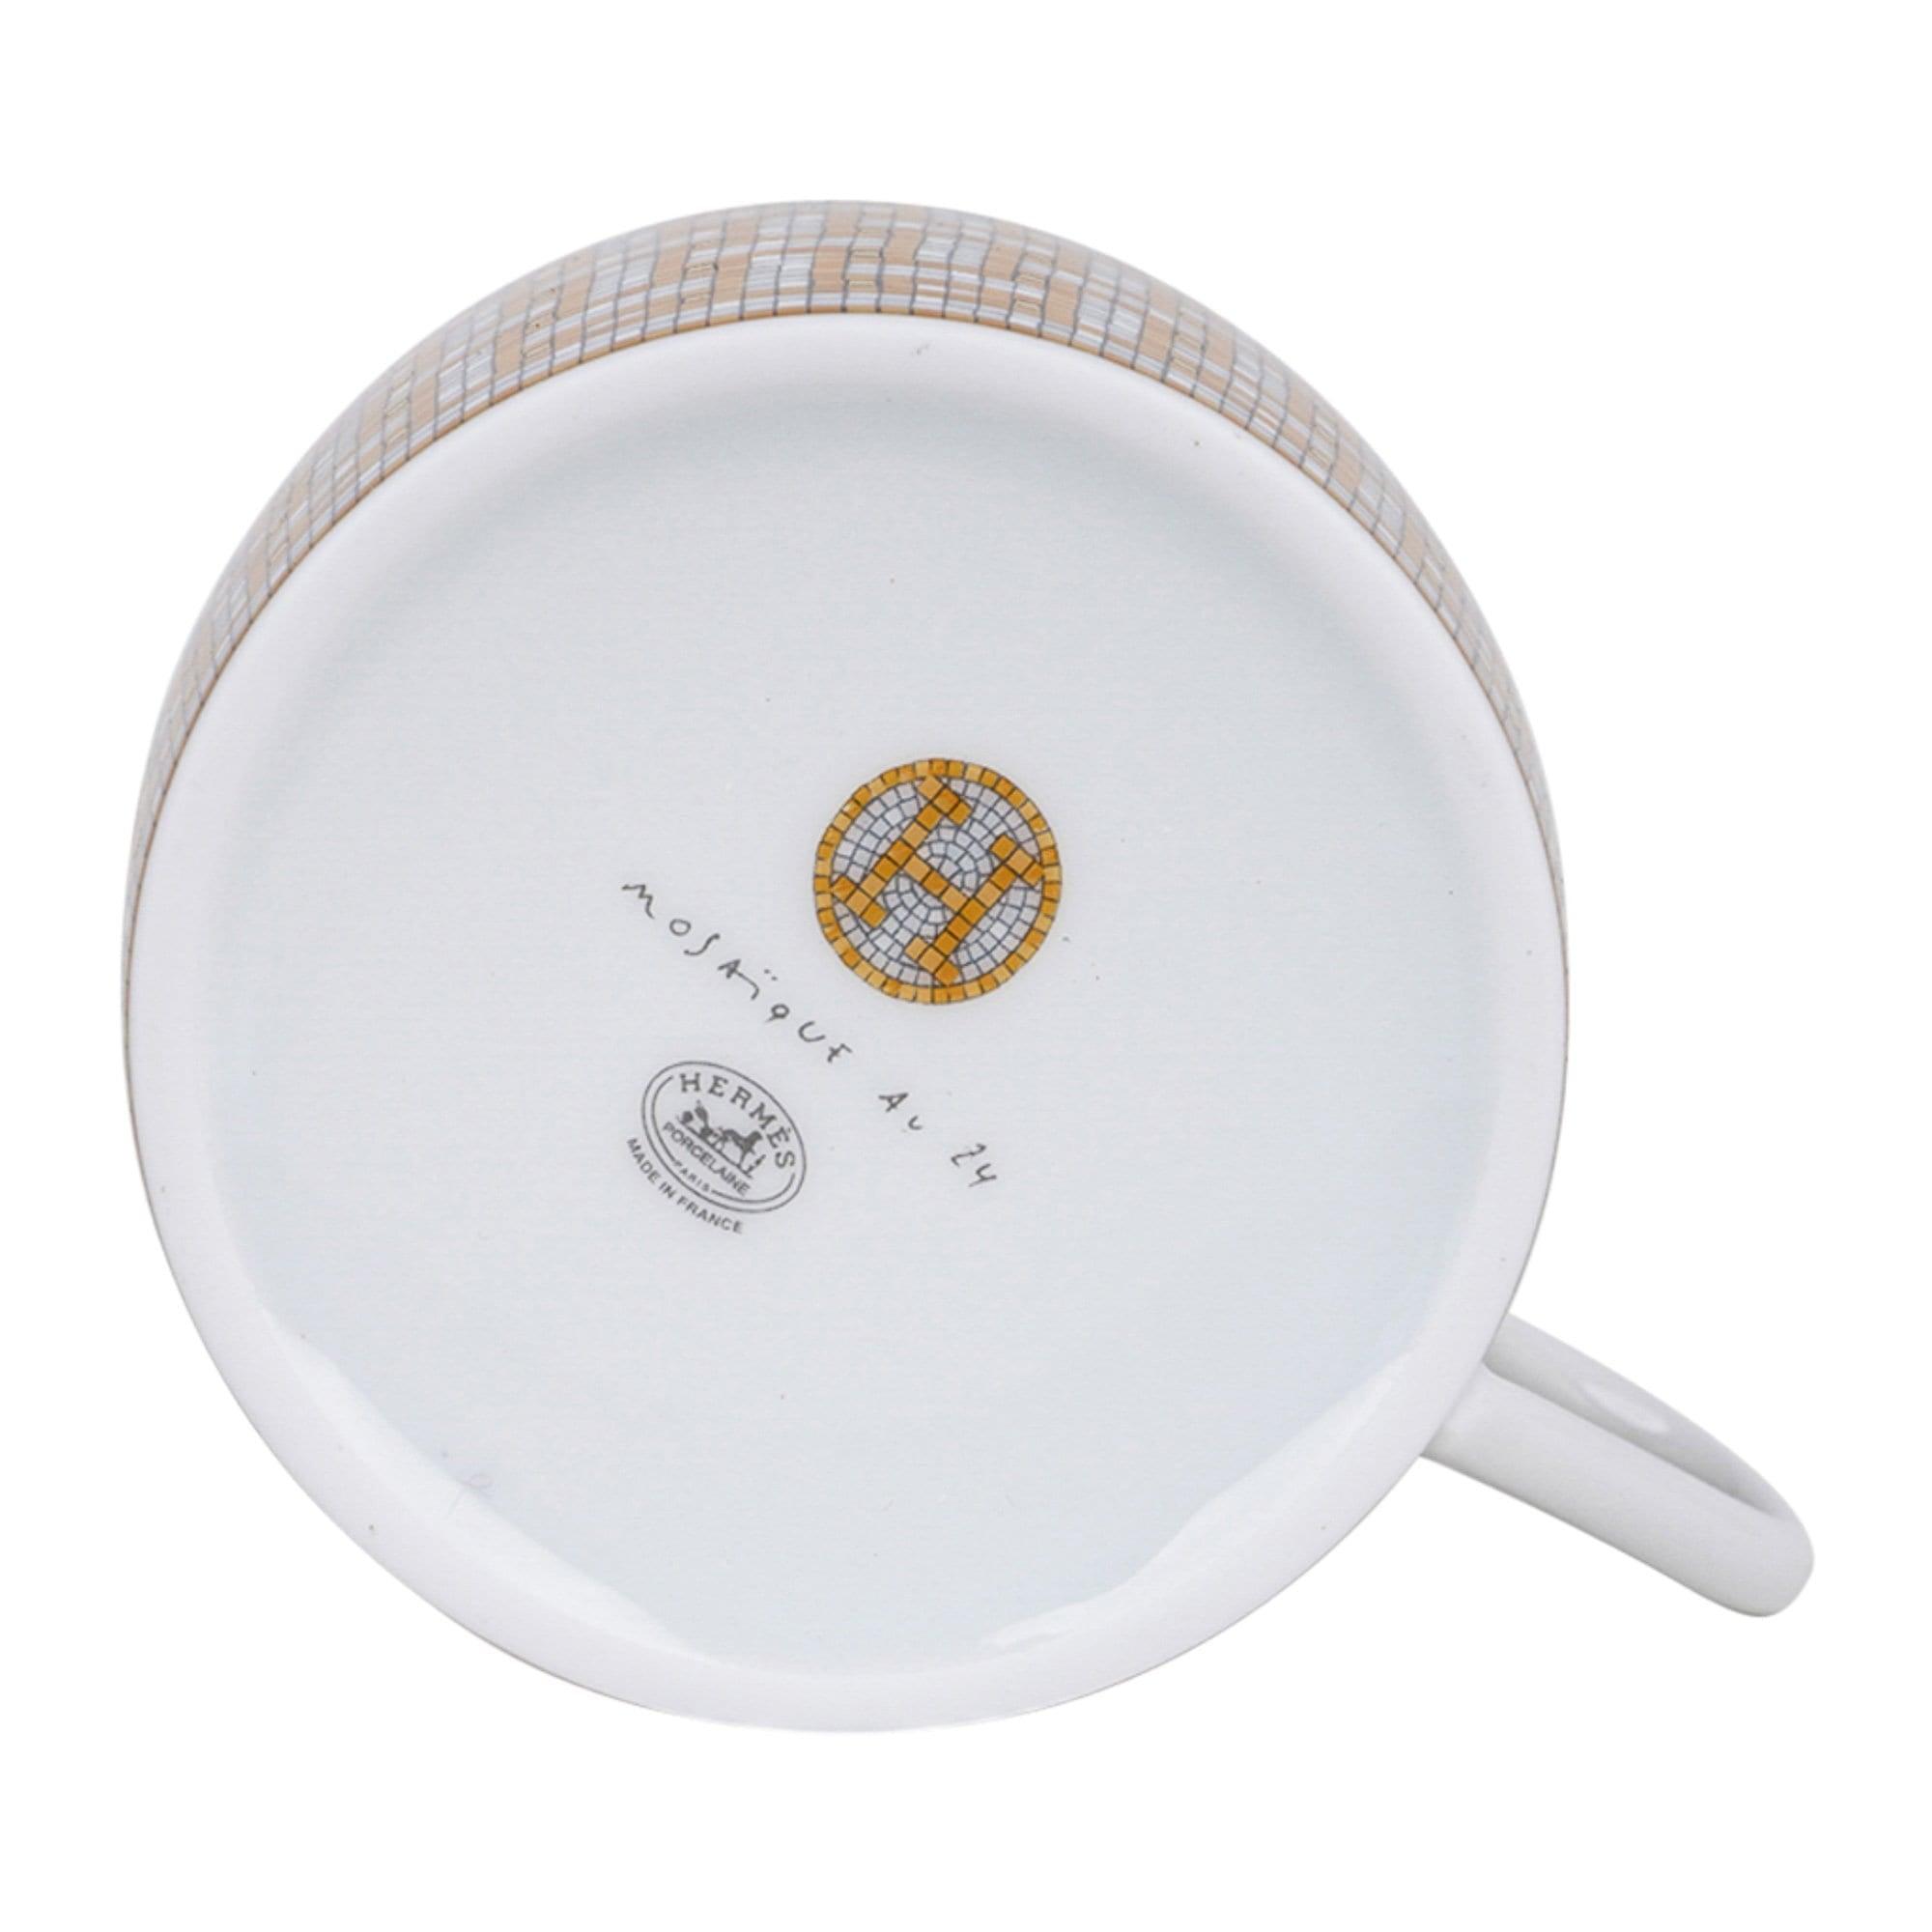 Hermes Mosaique Au 24 Gold Teapot Set of 4 Cup Saucer New w/Box